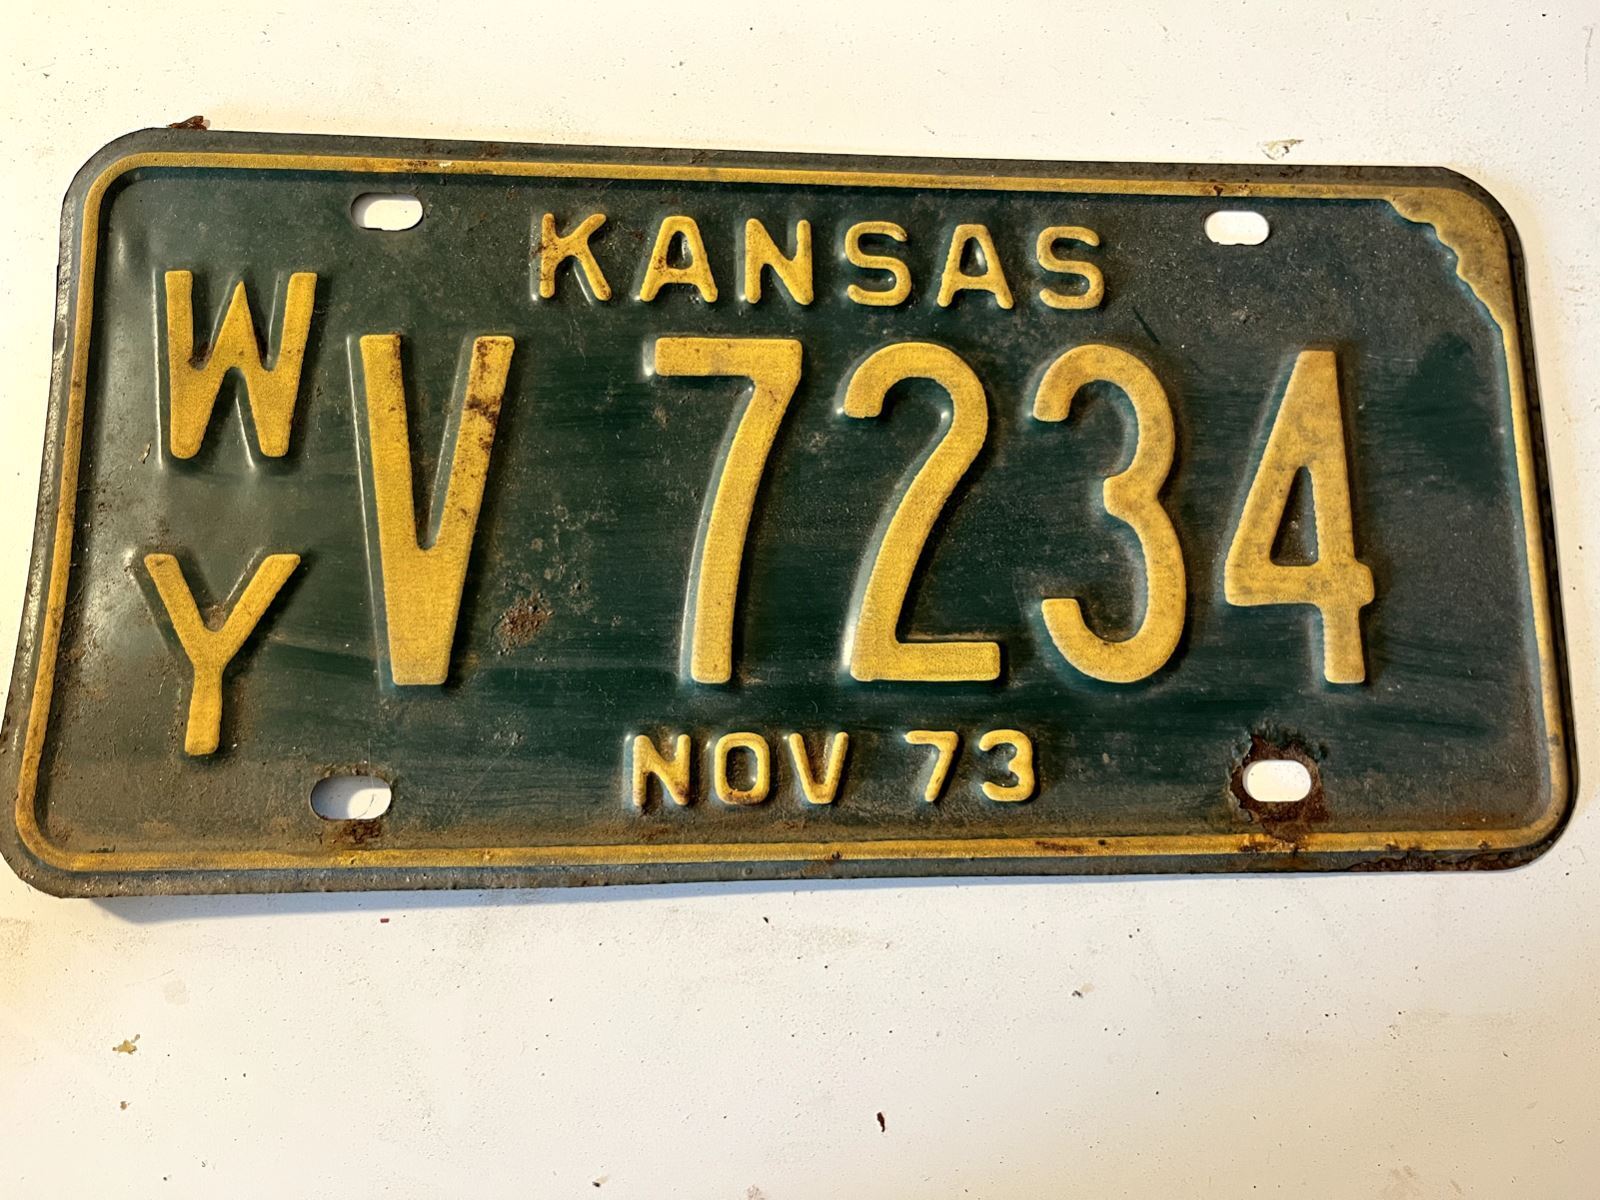 Vintage 1973 Kansas V7234 Wyandotte County License Plate